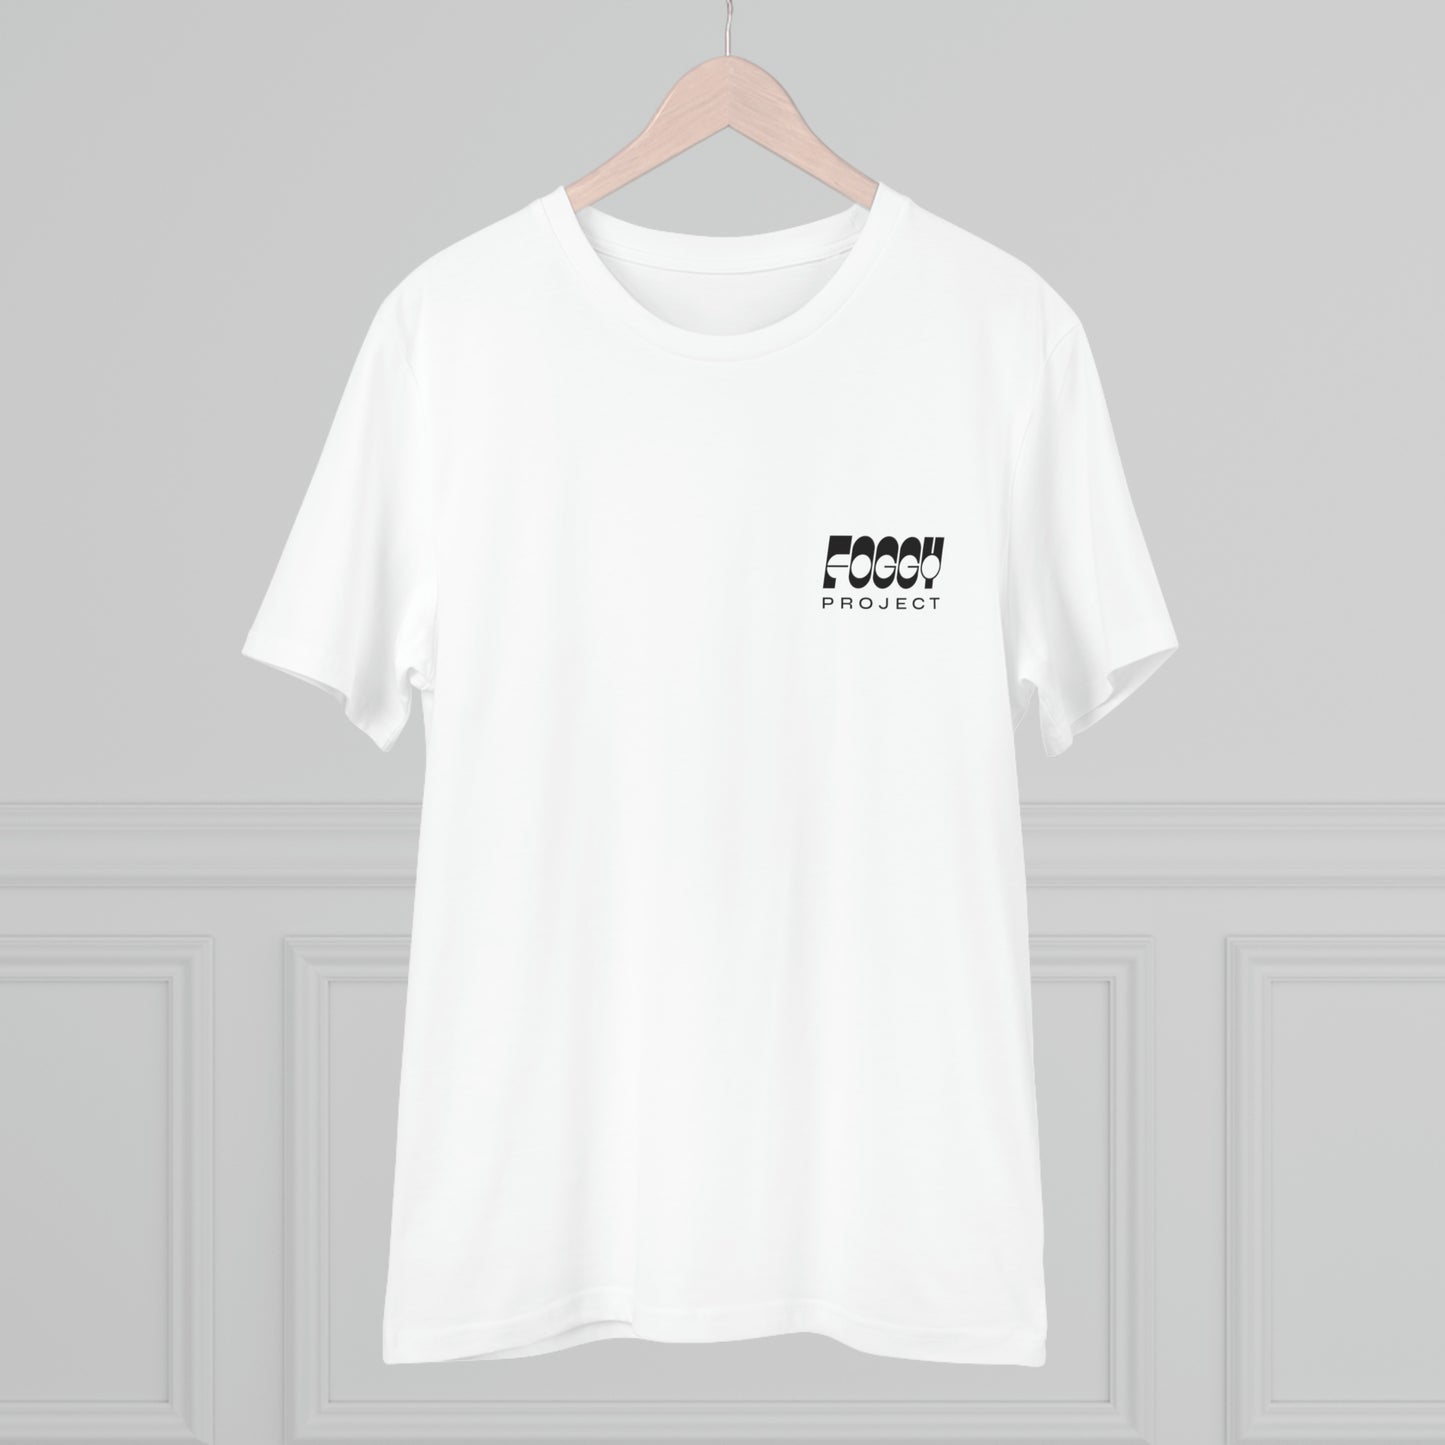 Foggy Project's Ahi! Buongiorno Front/Back White T-shirt - Unisex